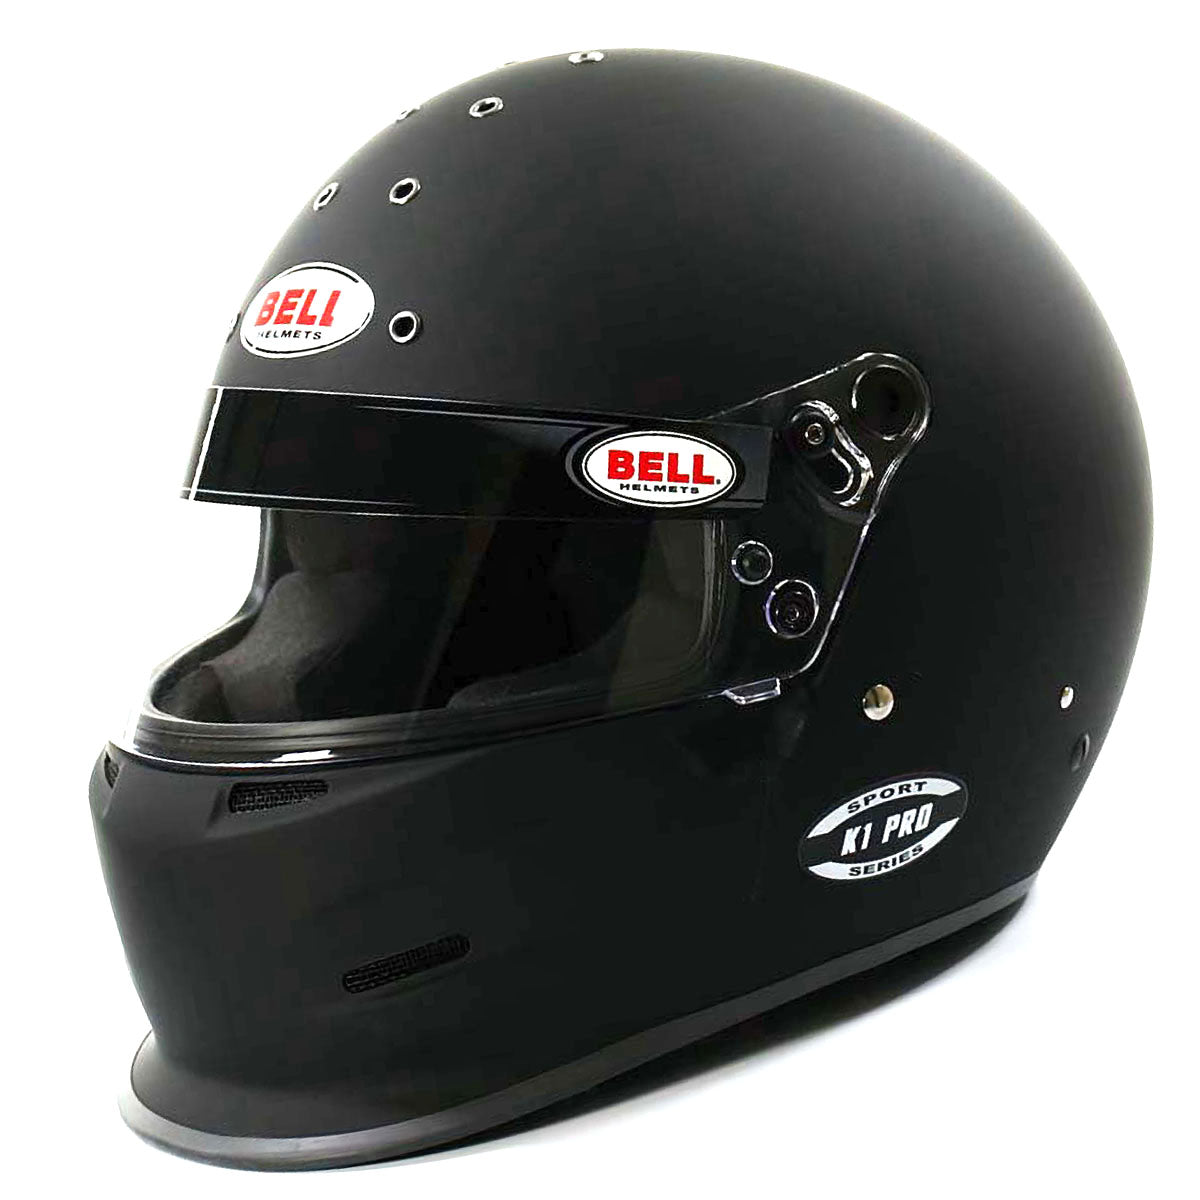 Bell K1 Pro Helmet SA2020 Black Front View Image